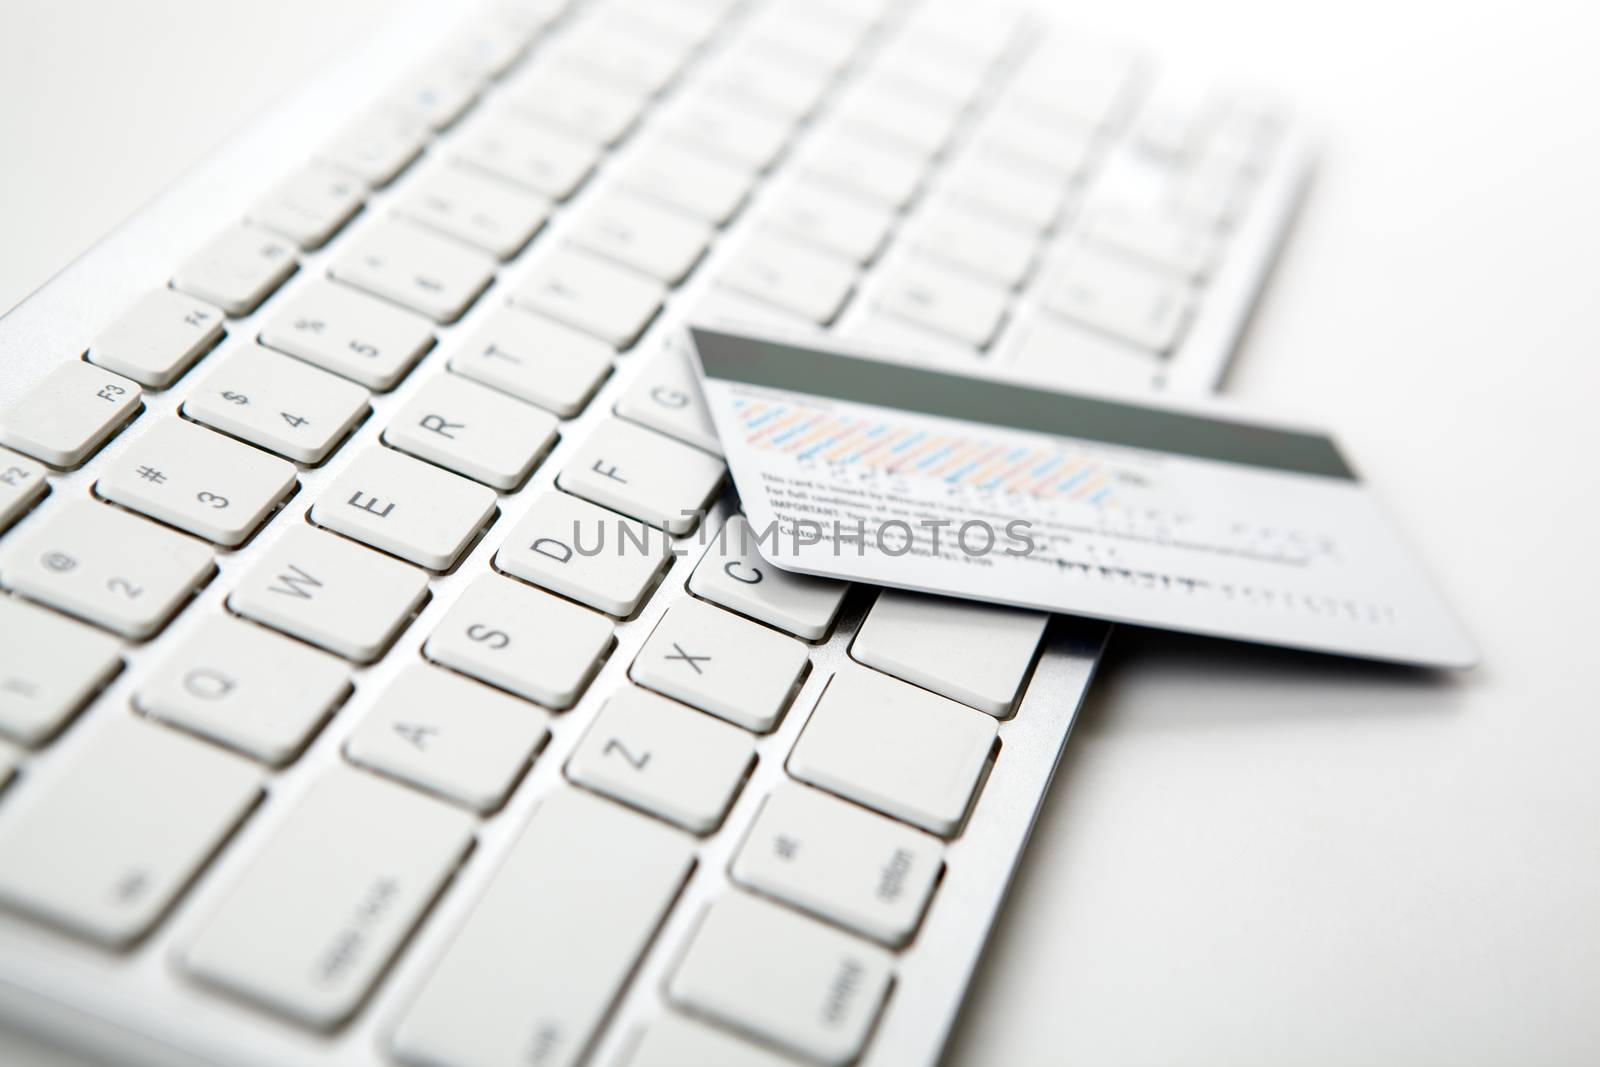 bank card lies on the laptop keyboard close up